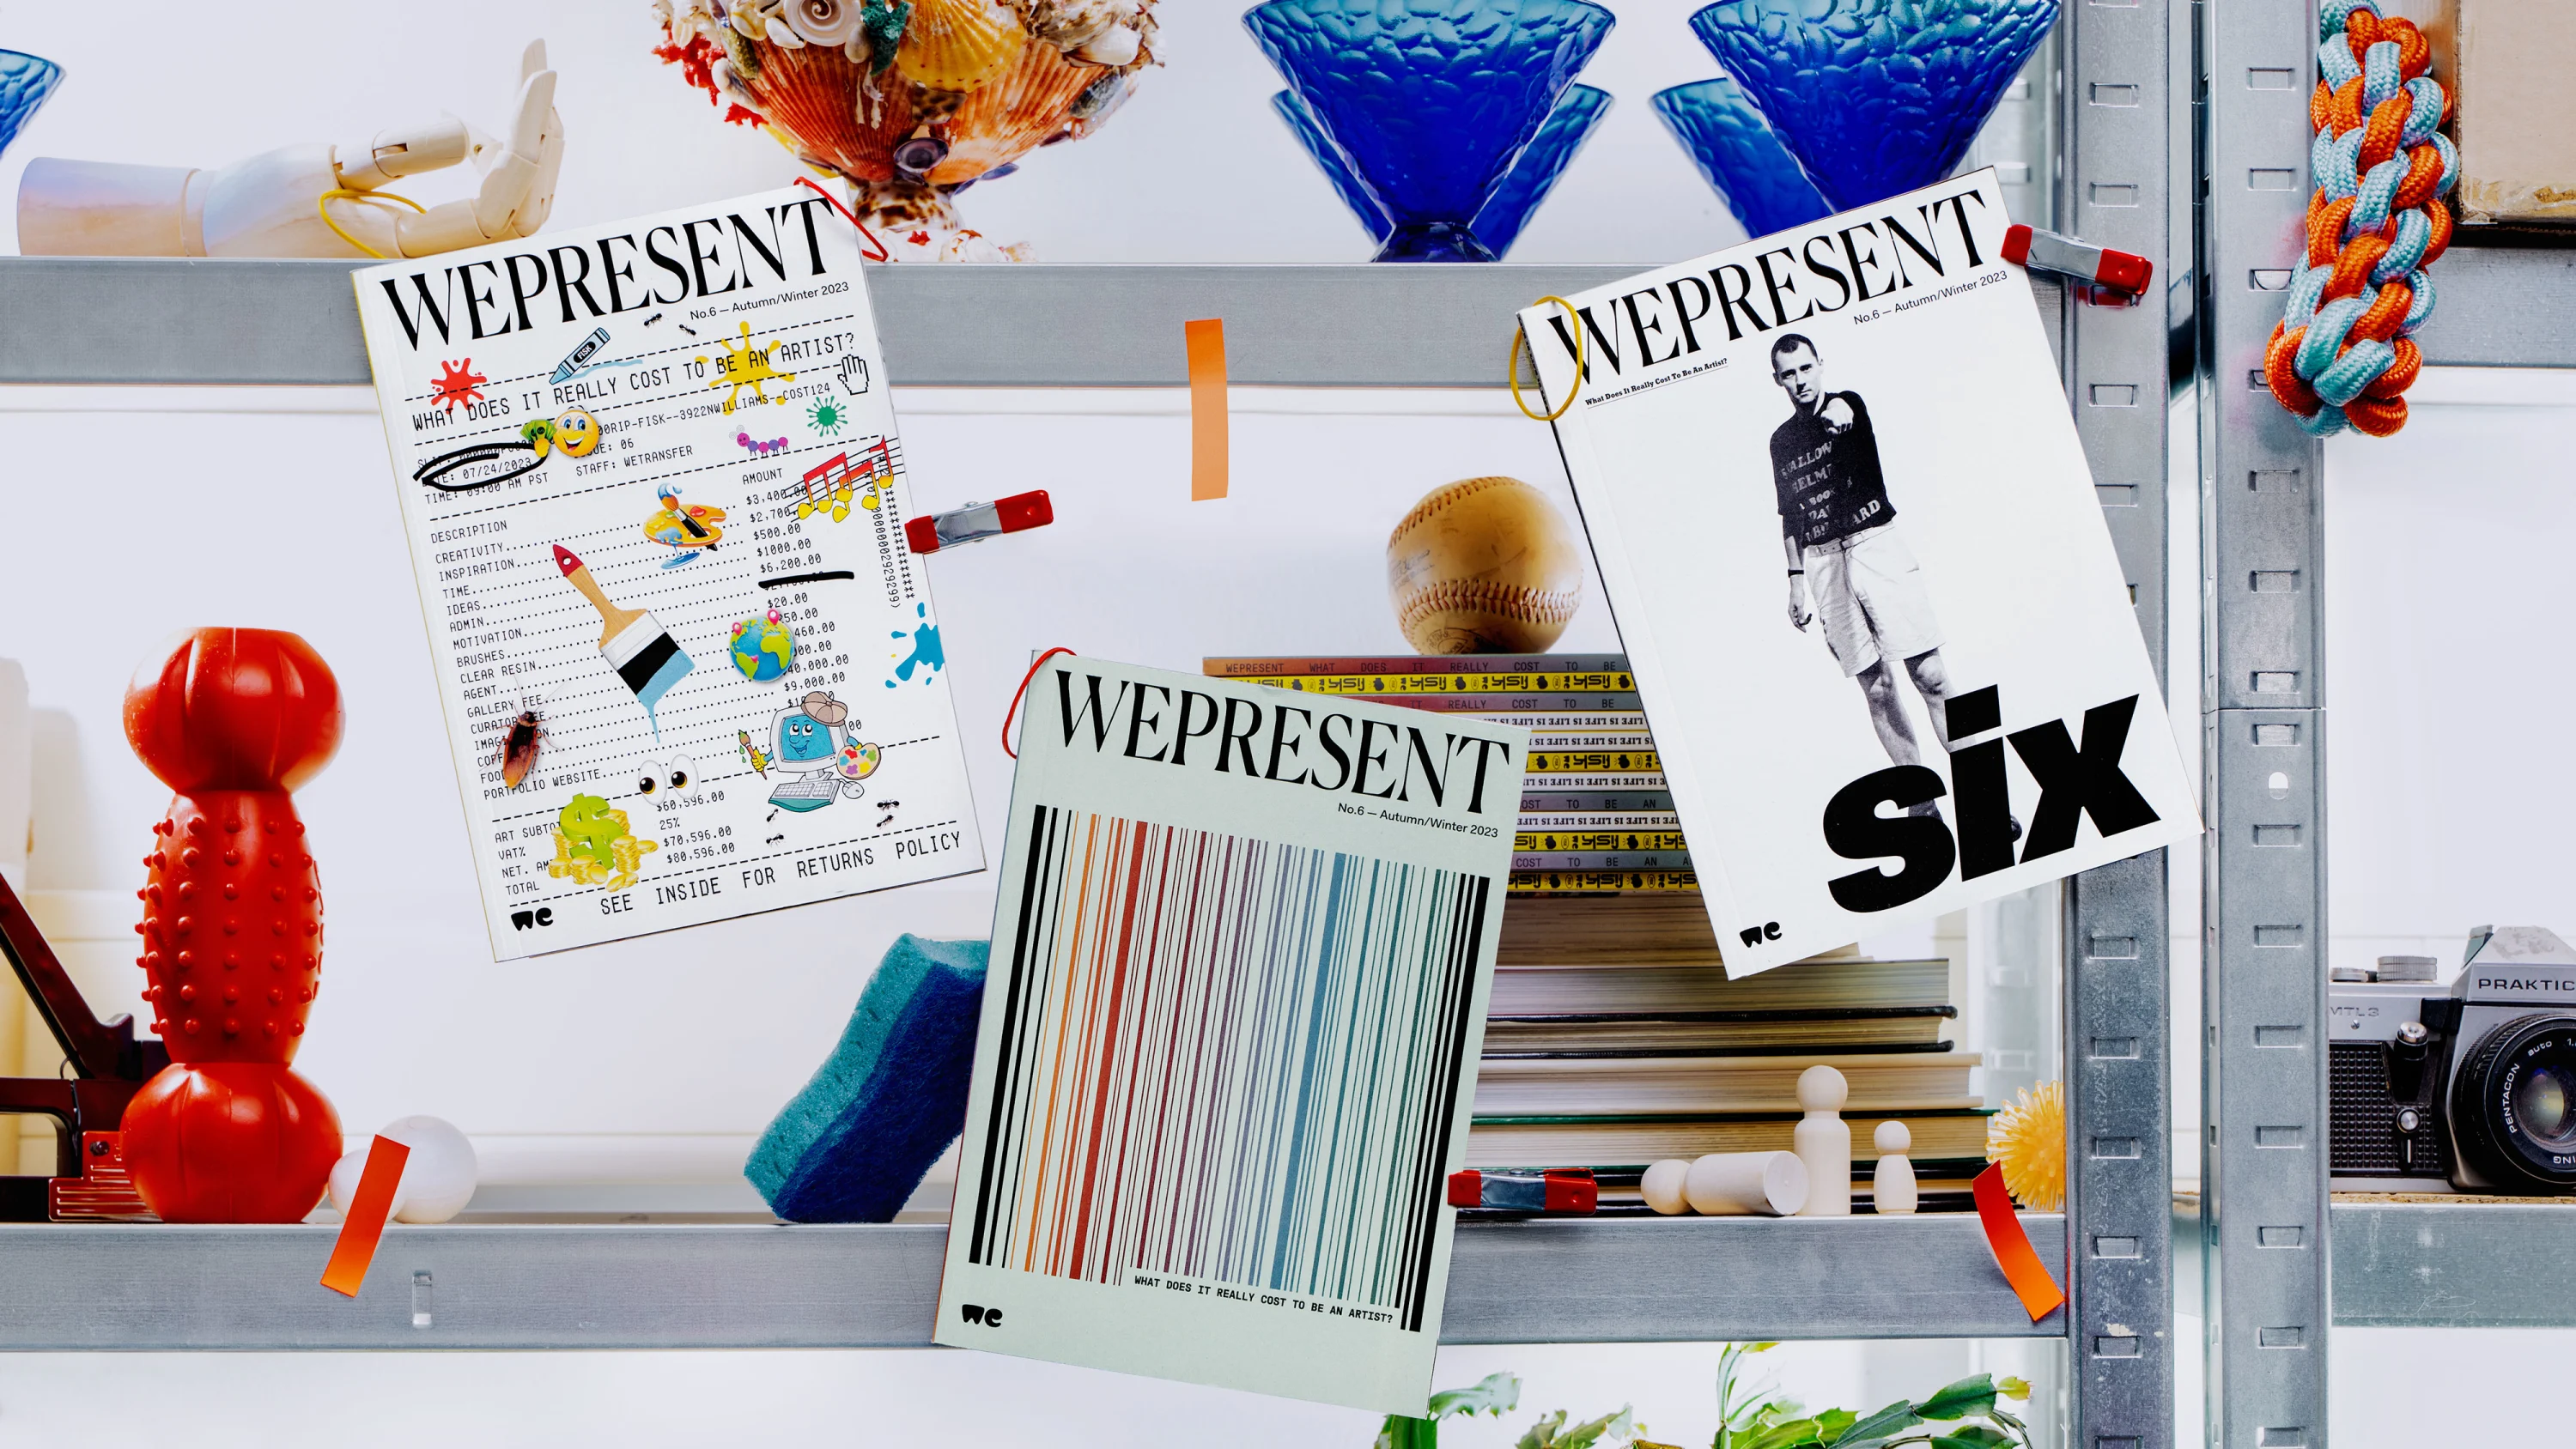 One magazine, three designers